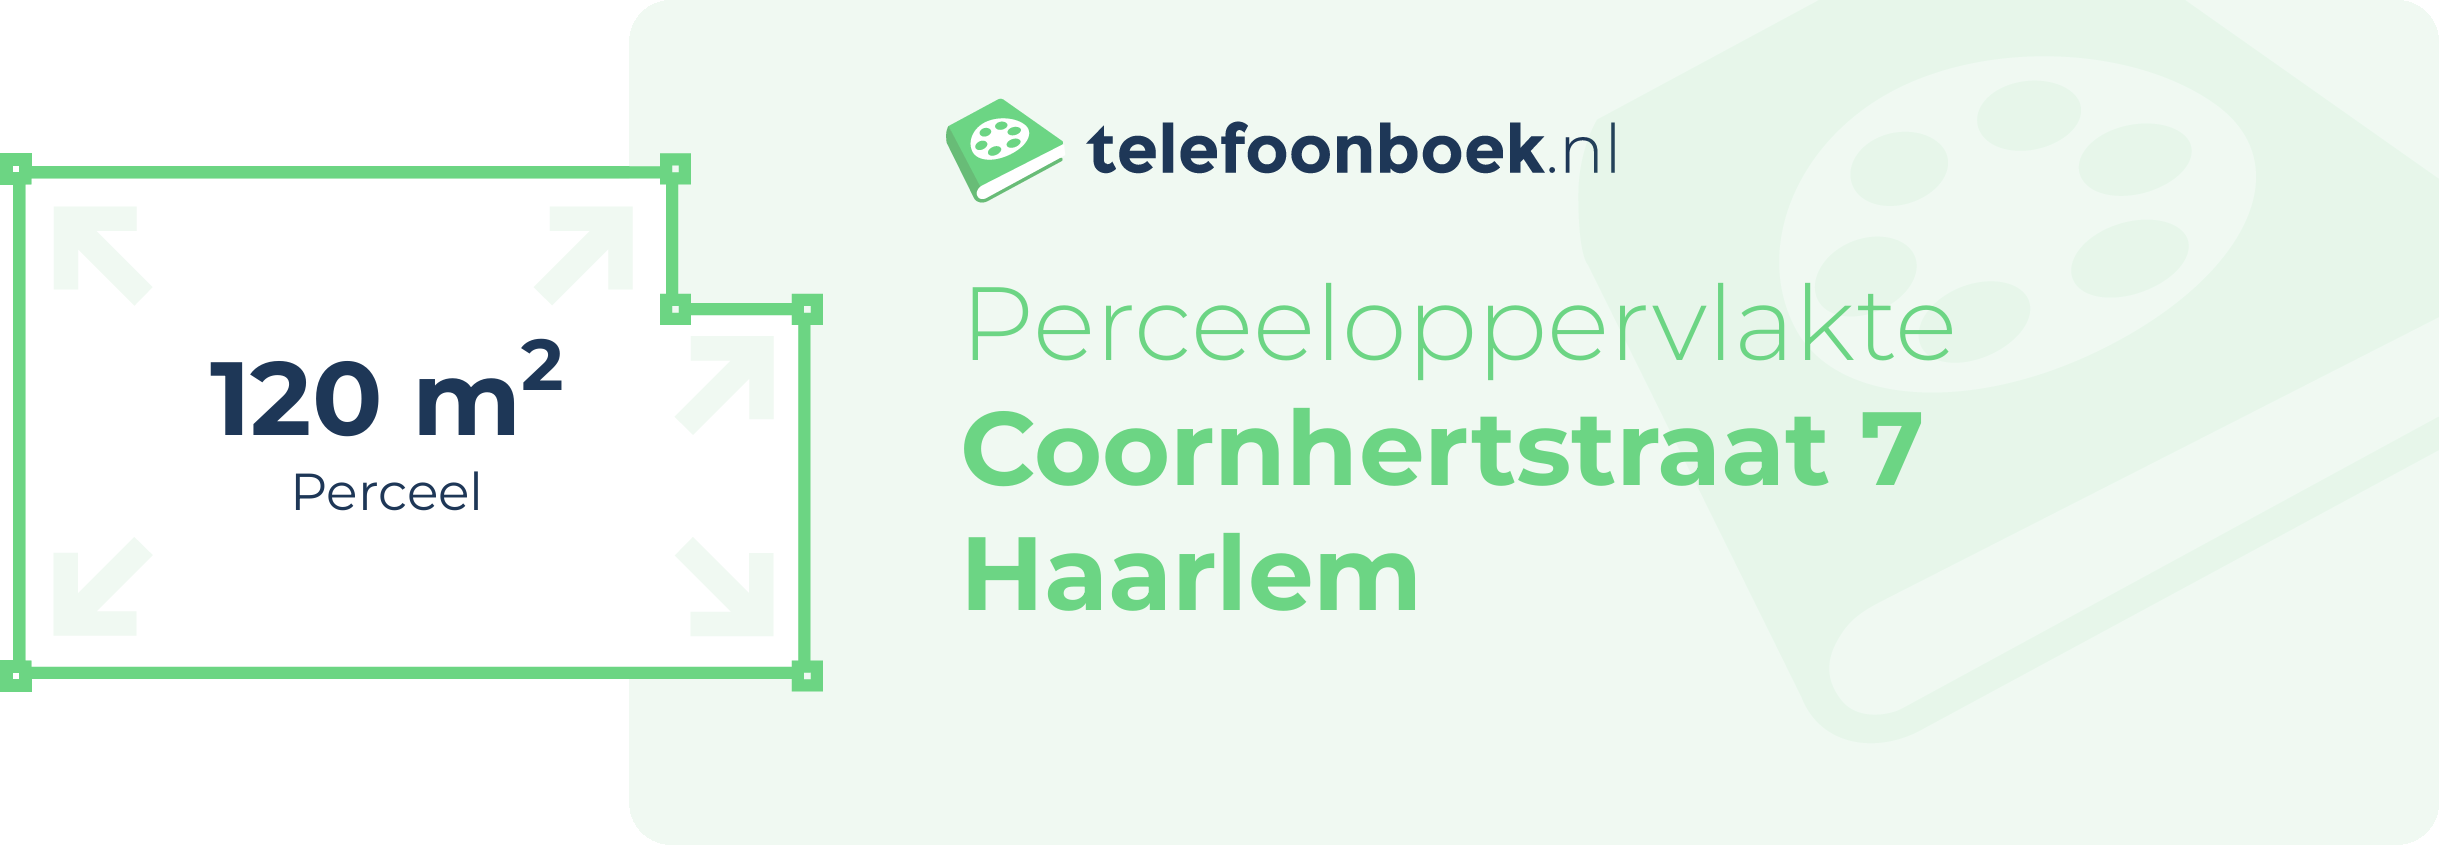 Perceeloppervlakte Coornhertstraat 7 Haarlem